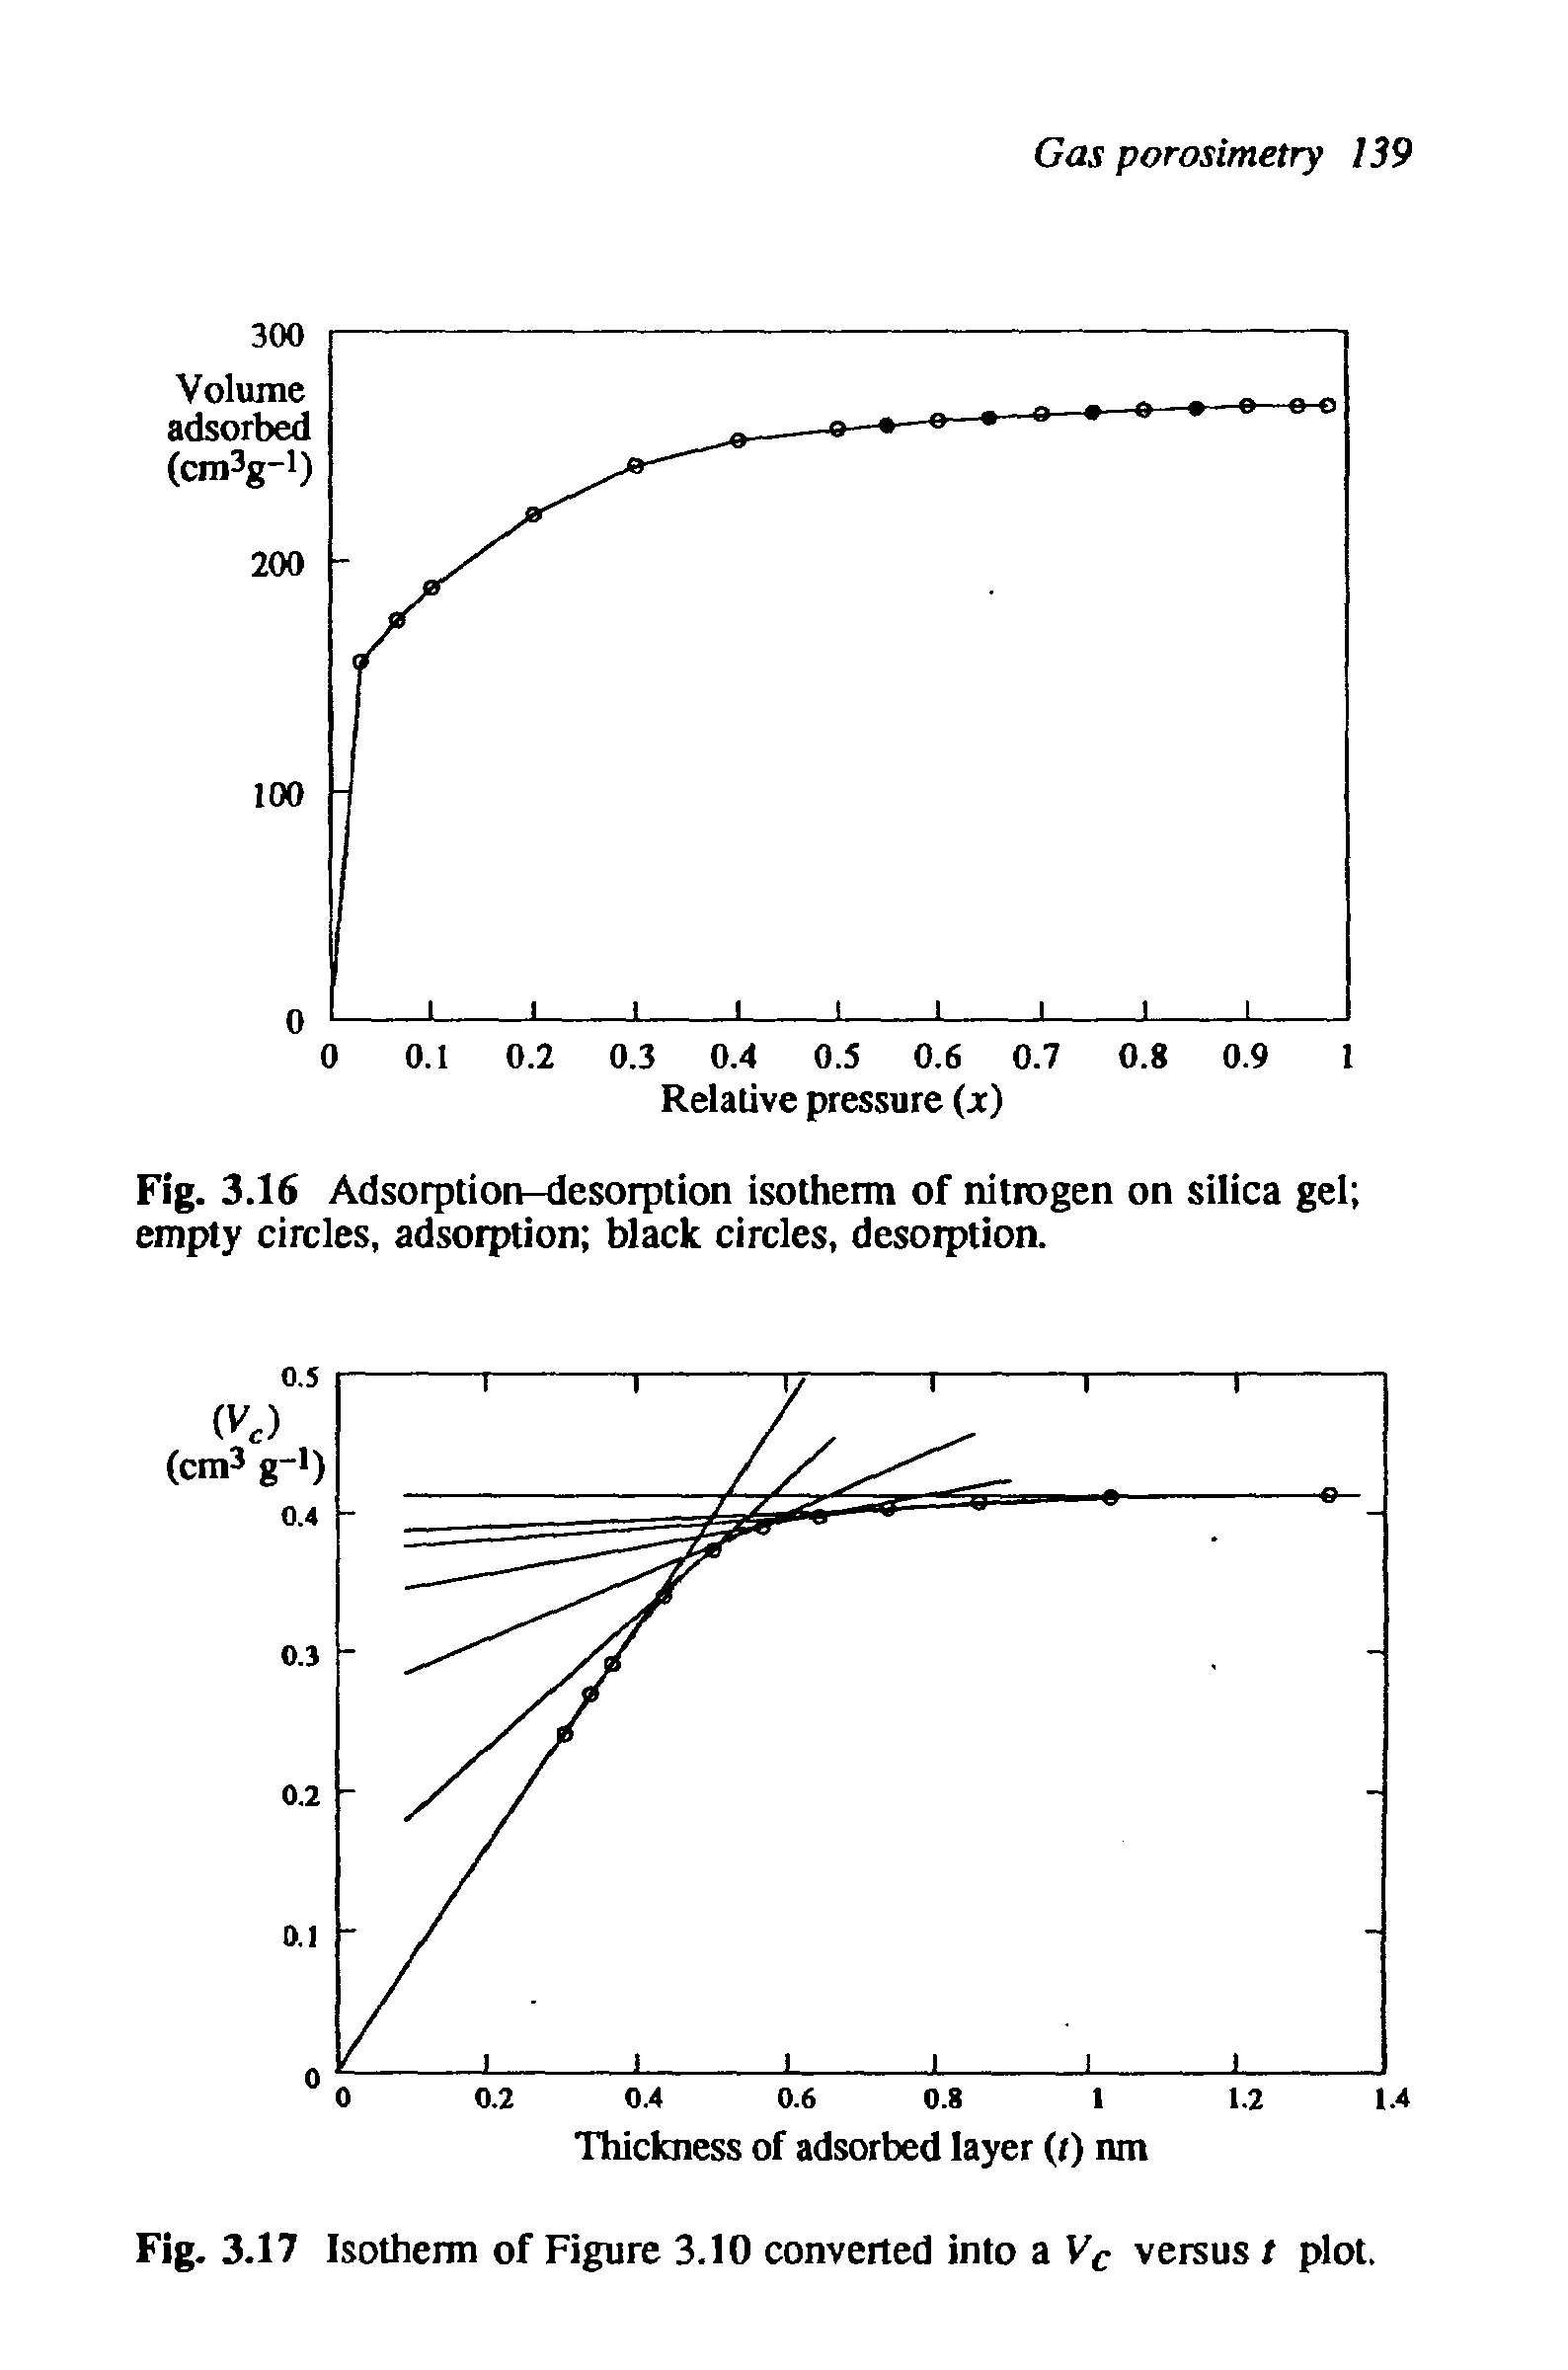 Fig. 3.16 Adsorption-desorption isotherm of nitrogen on silica gel empty circles, adsorption black circles, desoiption.